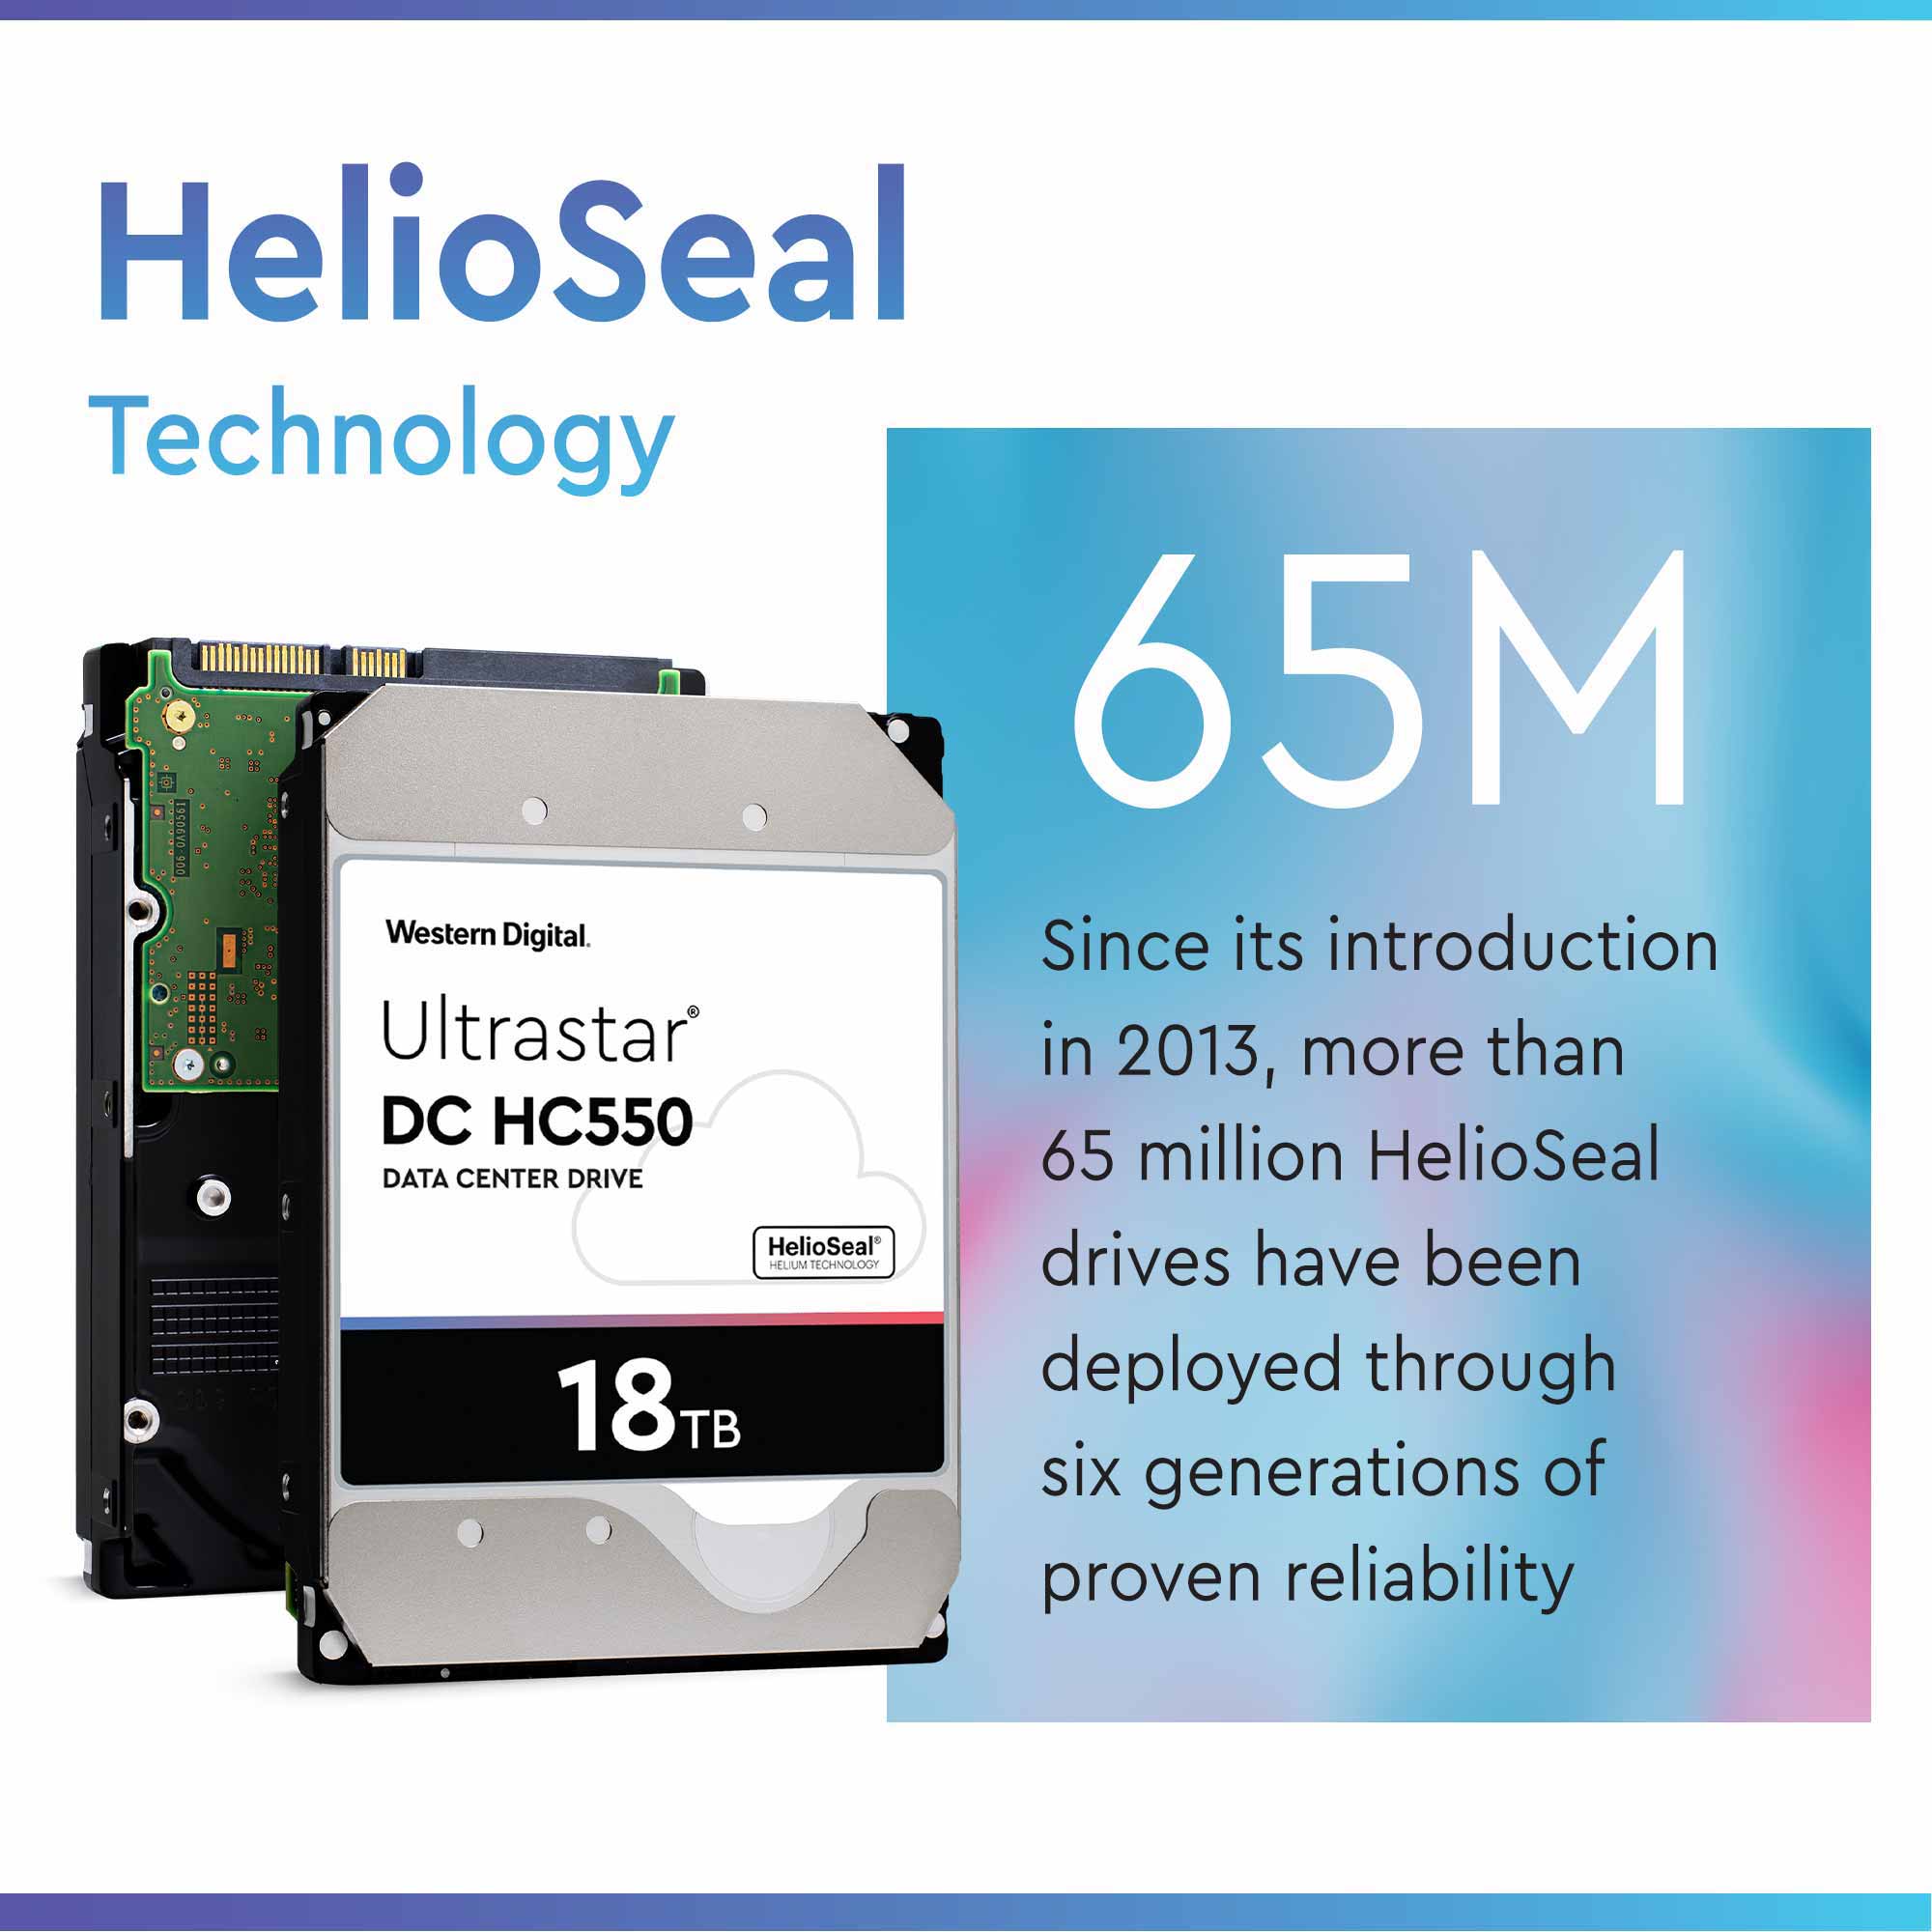 WD Ultrastar 18TB HDD DC HC550 7200RPM SATA 6Gb/s 3.5" Enterprise Hard Drive WUH721818ALE6L4 (0F38459) - Helioseal Technology